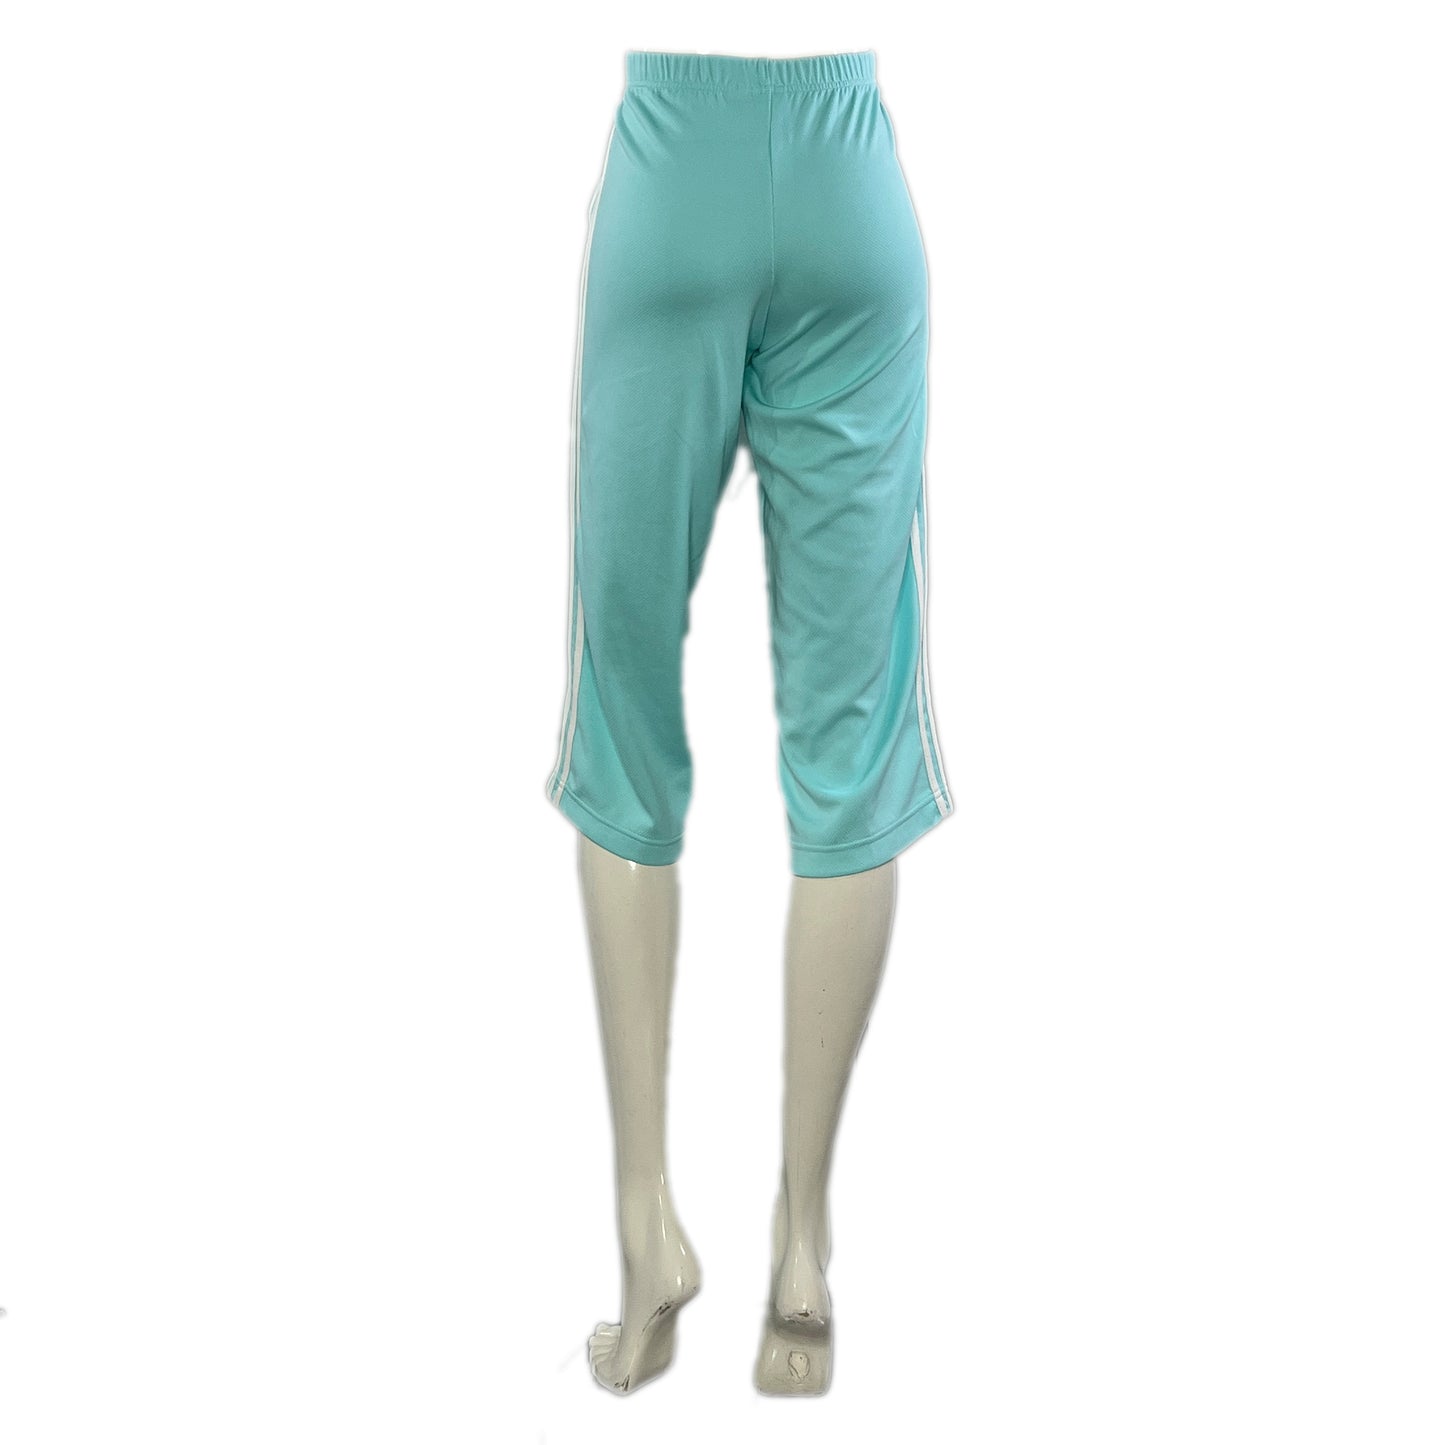 Adidas Jogger Pants Light Blue, White Size S SKU 000261-7